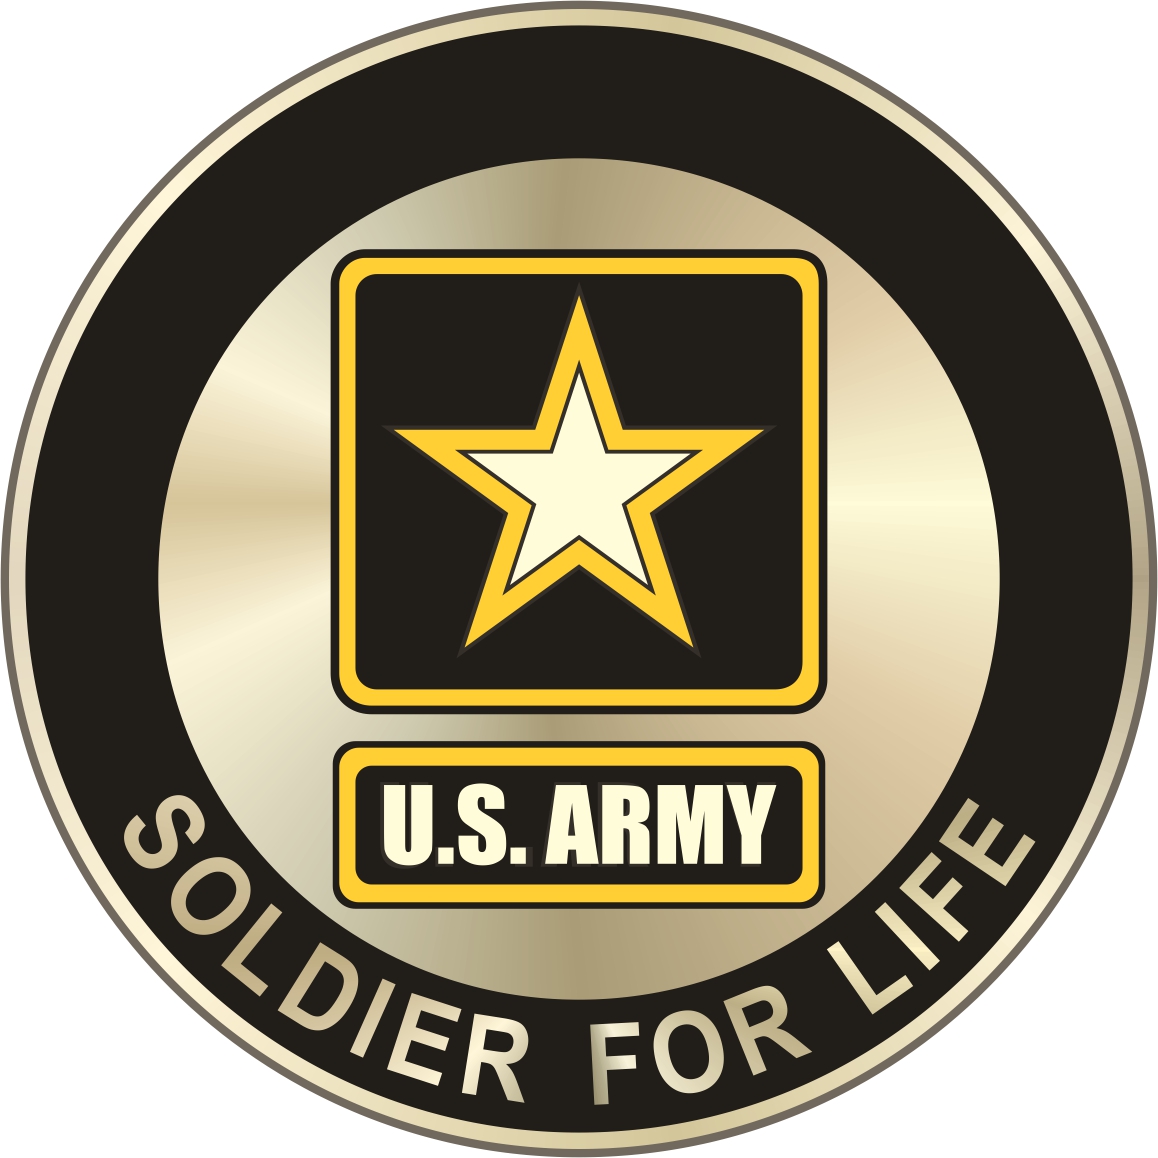 Soldier for Life window sticker | Retiree News1158 x 1158